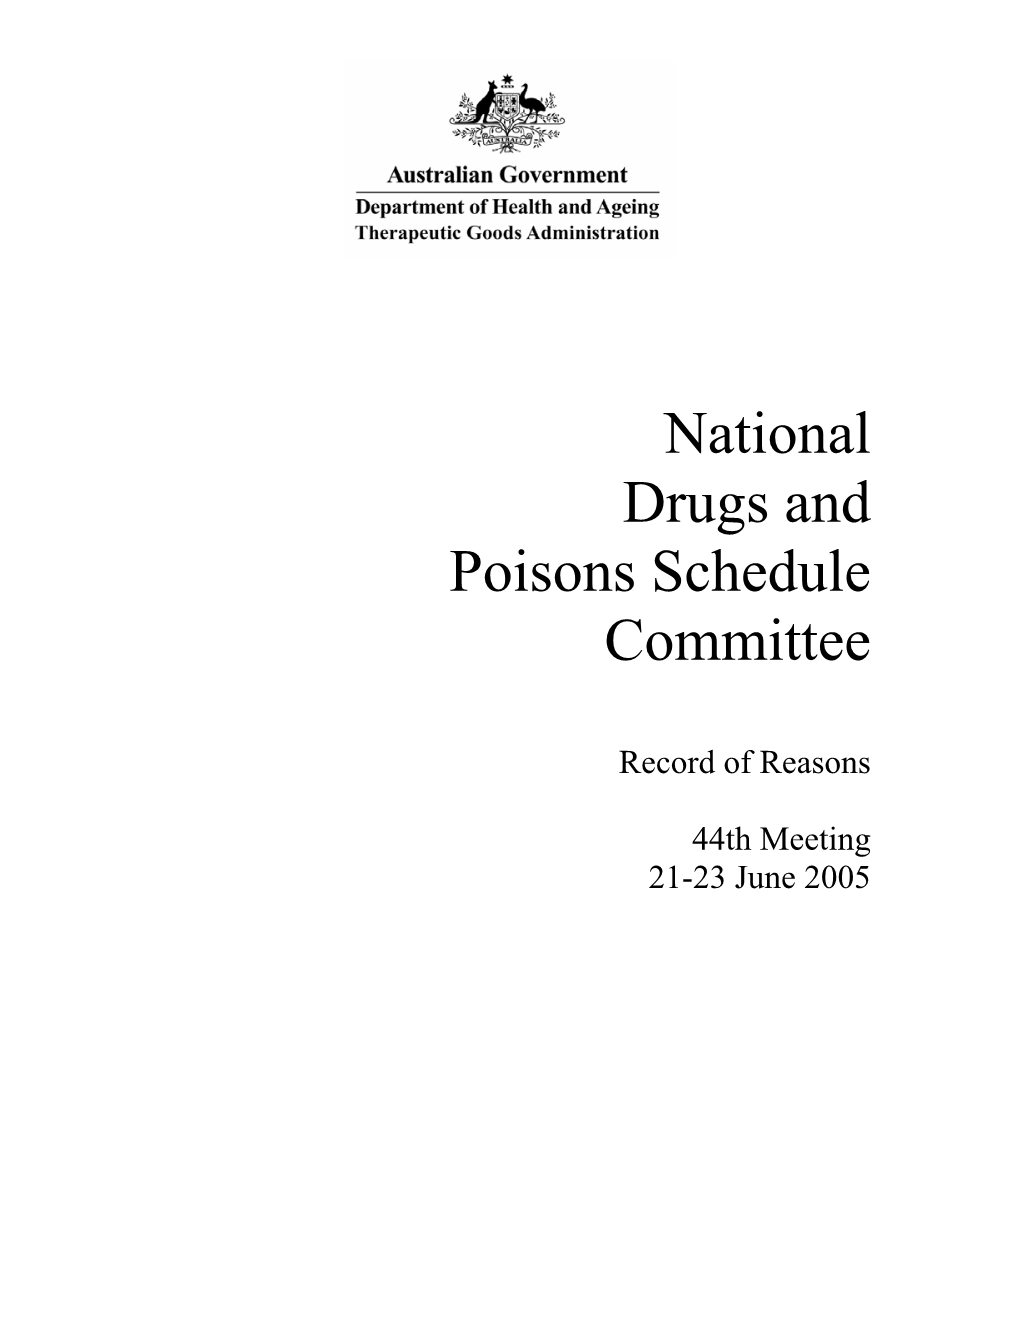 NDPSC Record of Reasons June 2005 Meeting